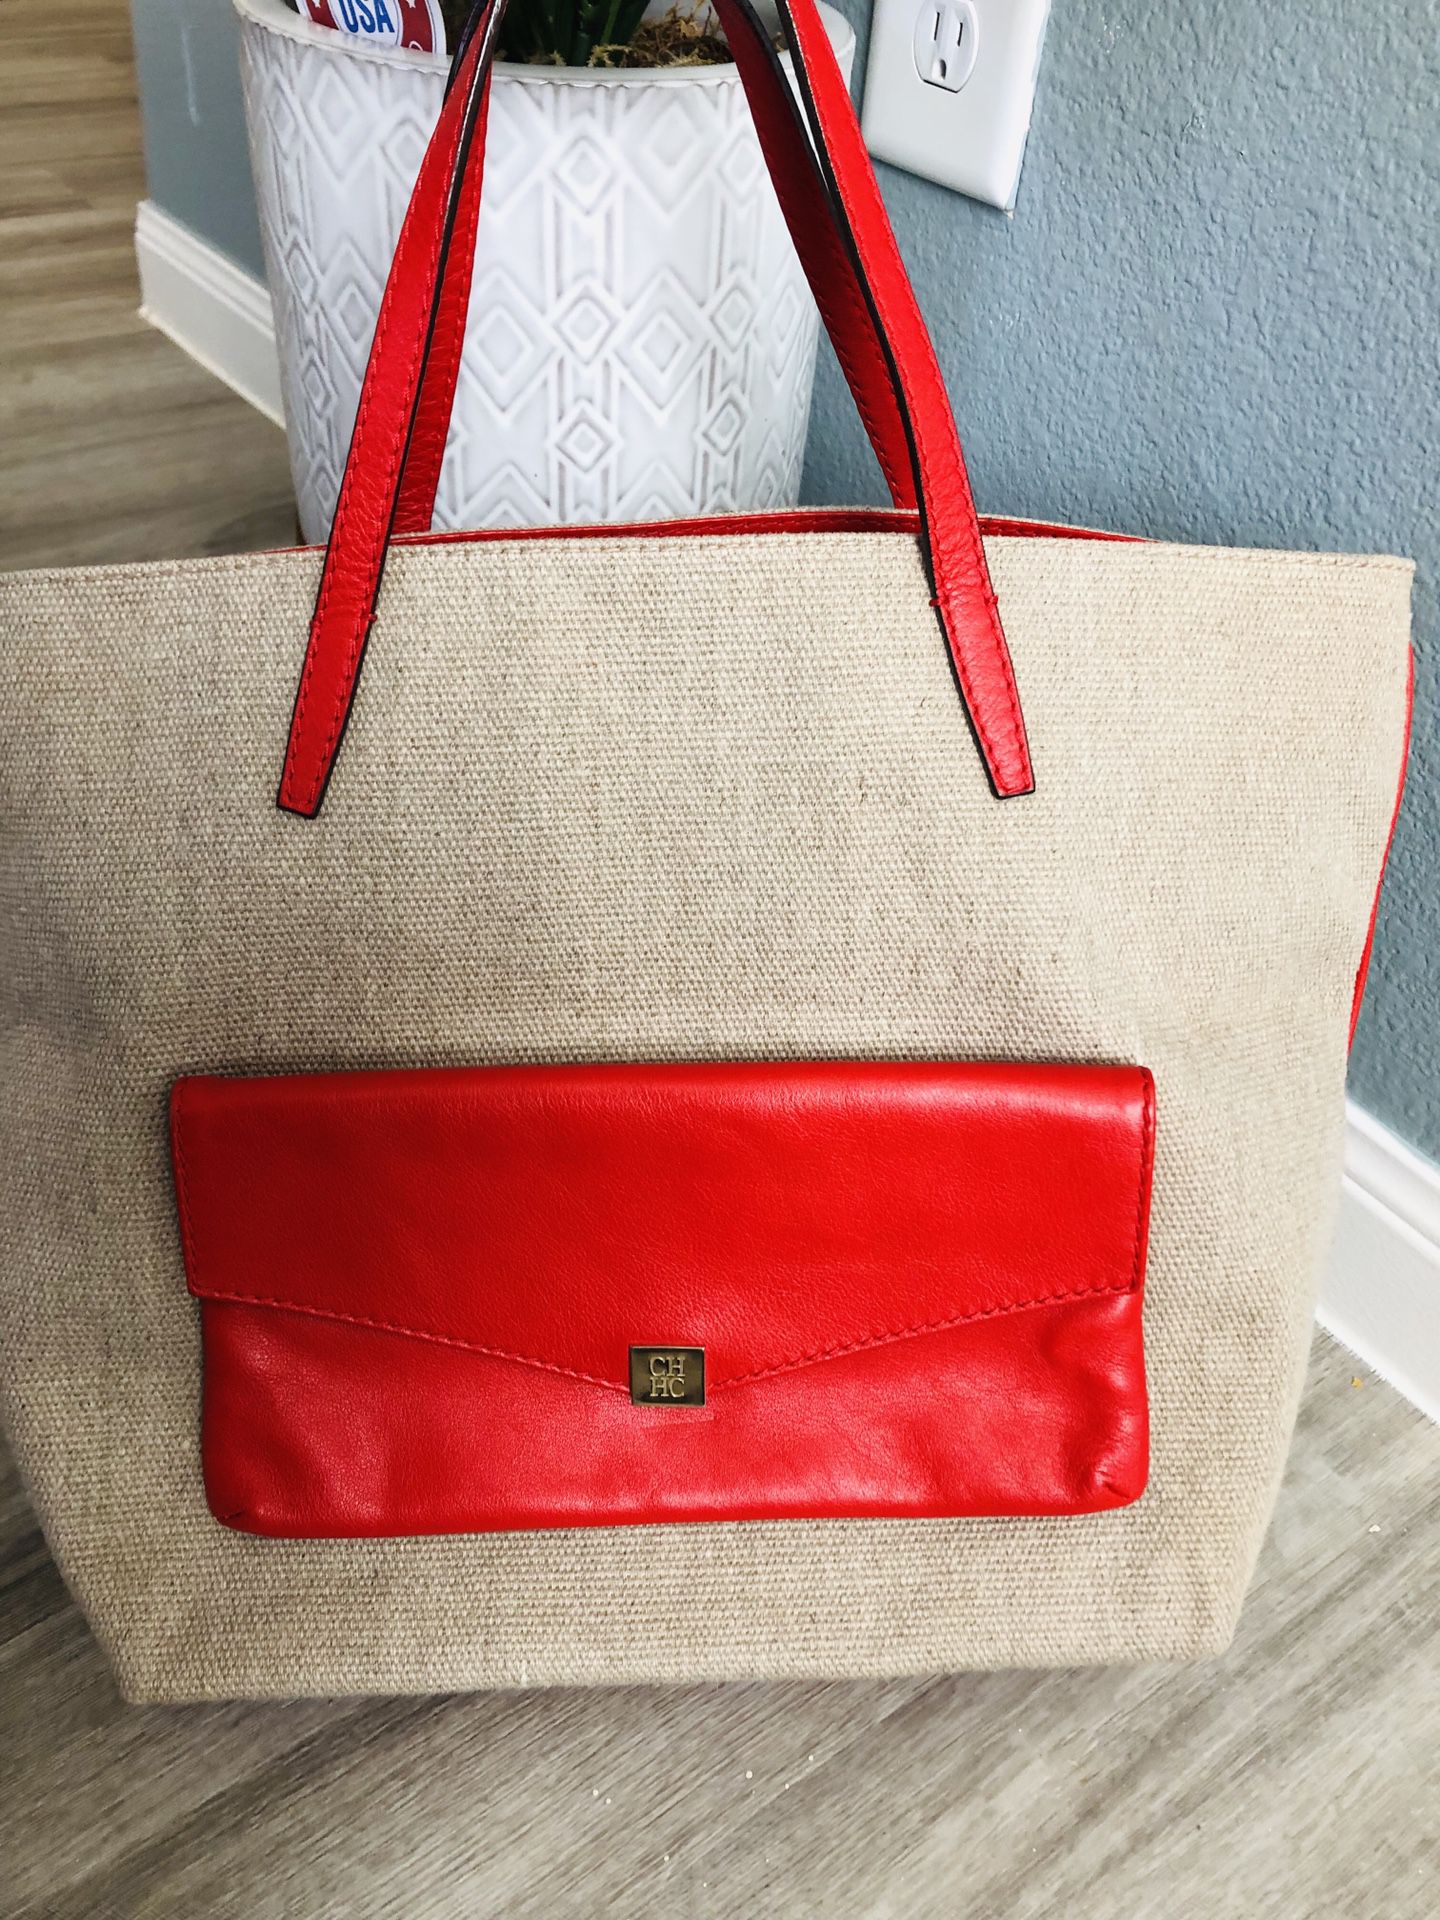 New Carolina Herrera Tote Bag for Sale in Redmond, WA - OfferUp